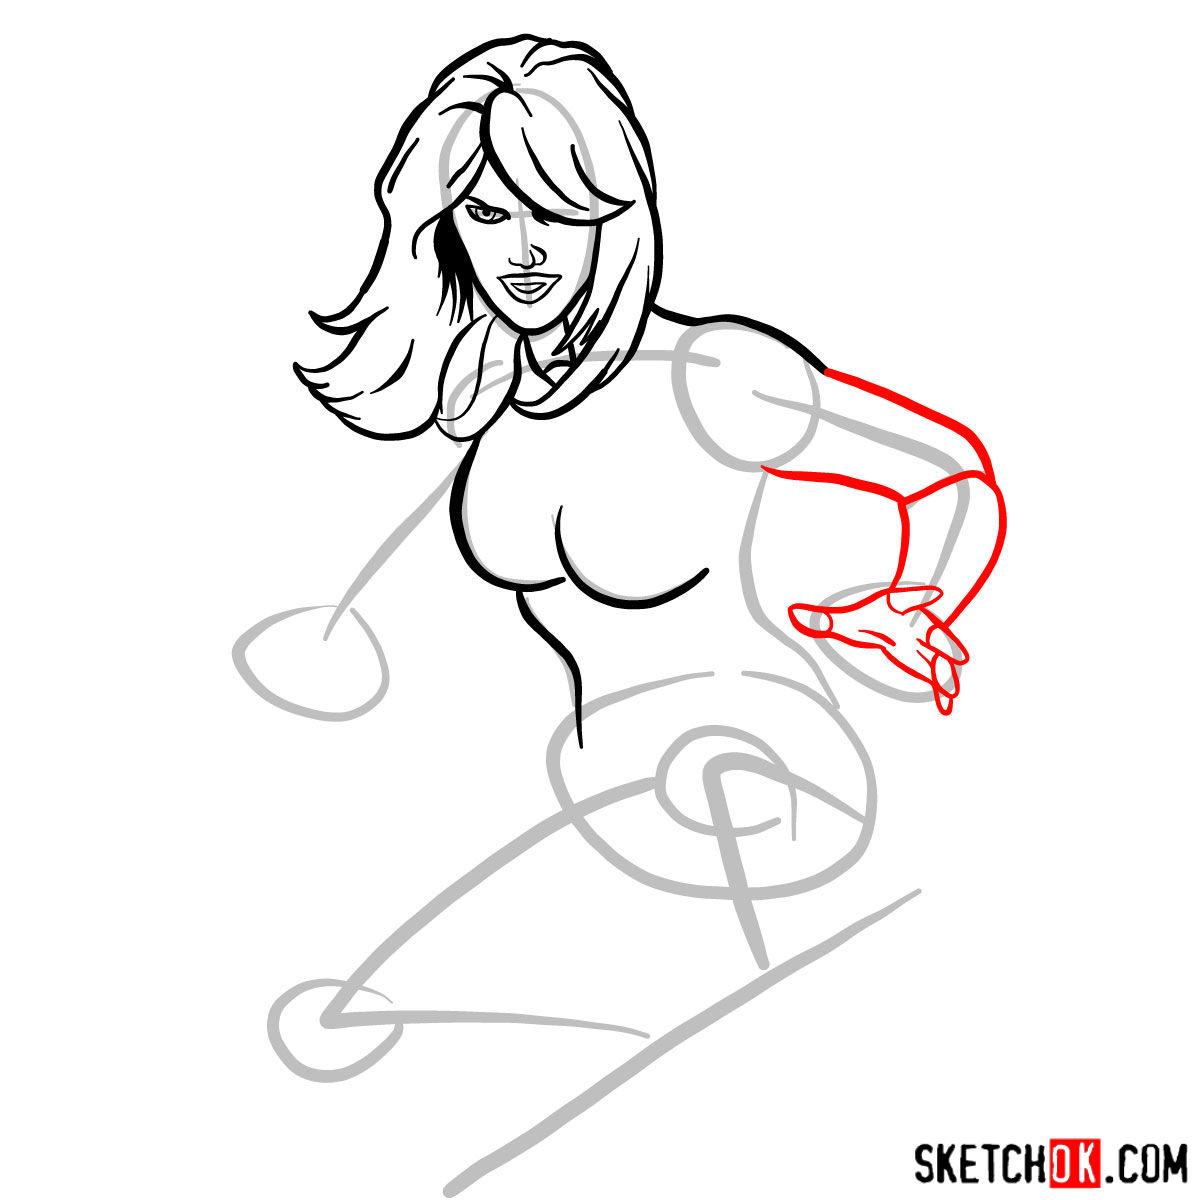 How to draw Black Canary, a DC Comics superheroine - step 05